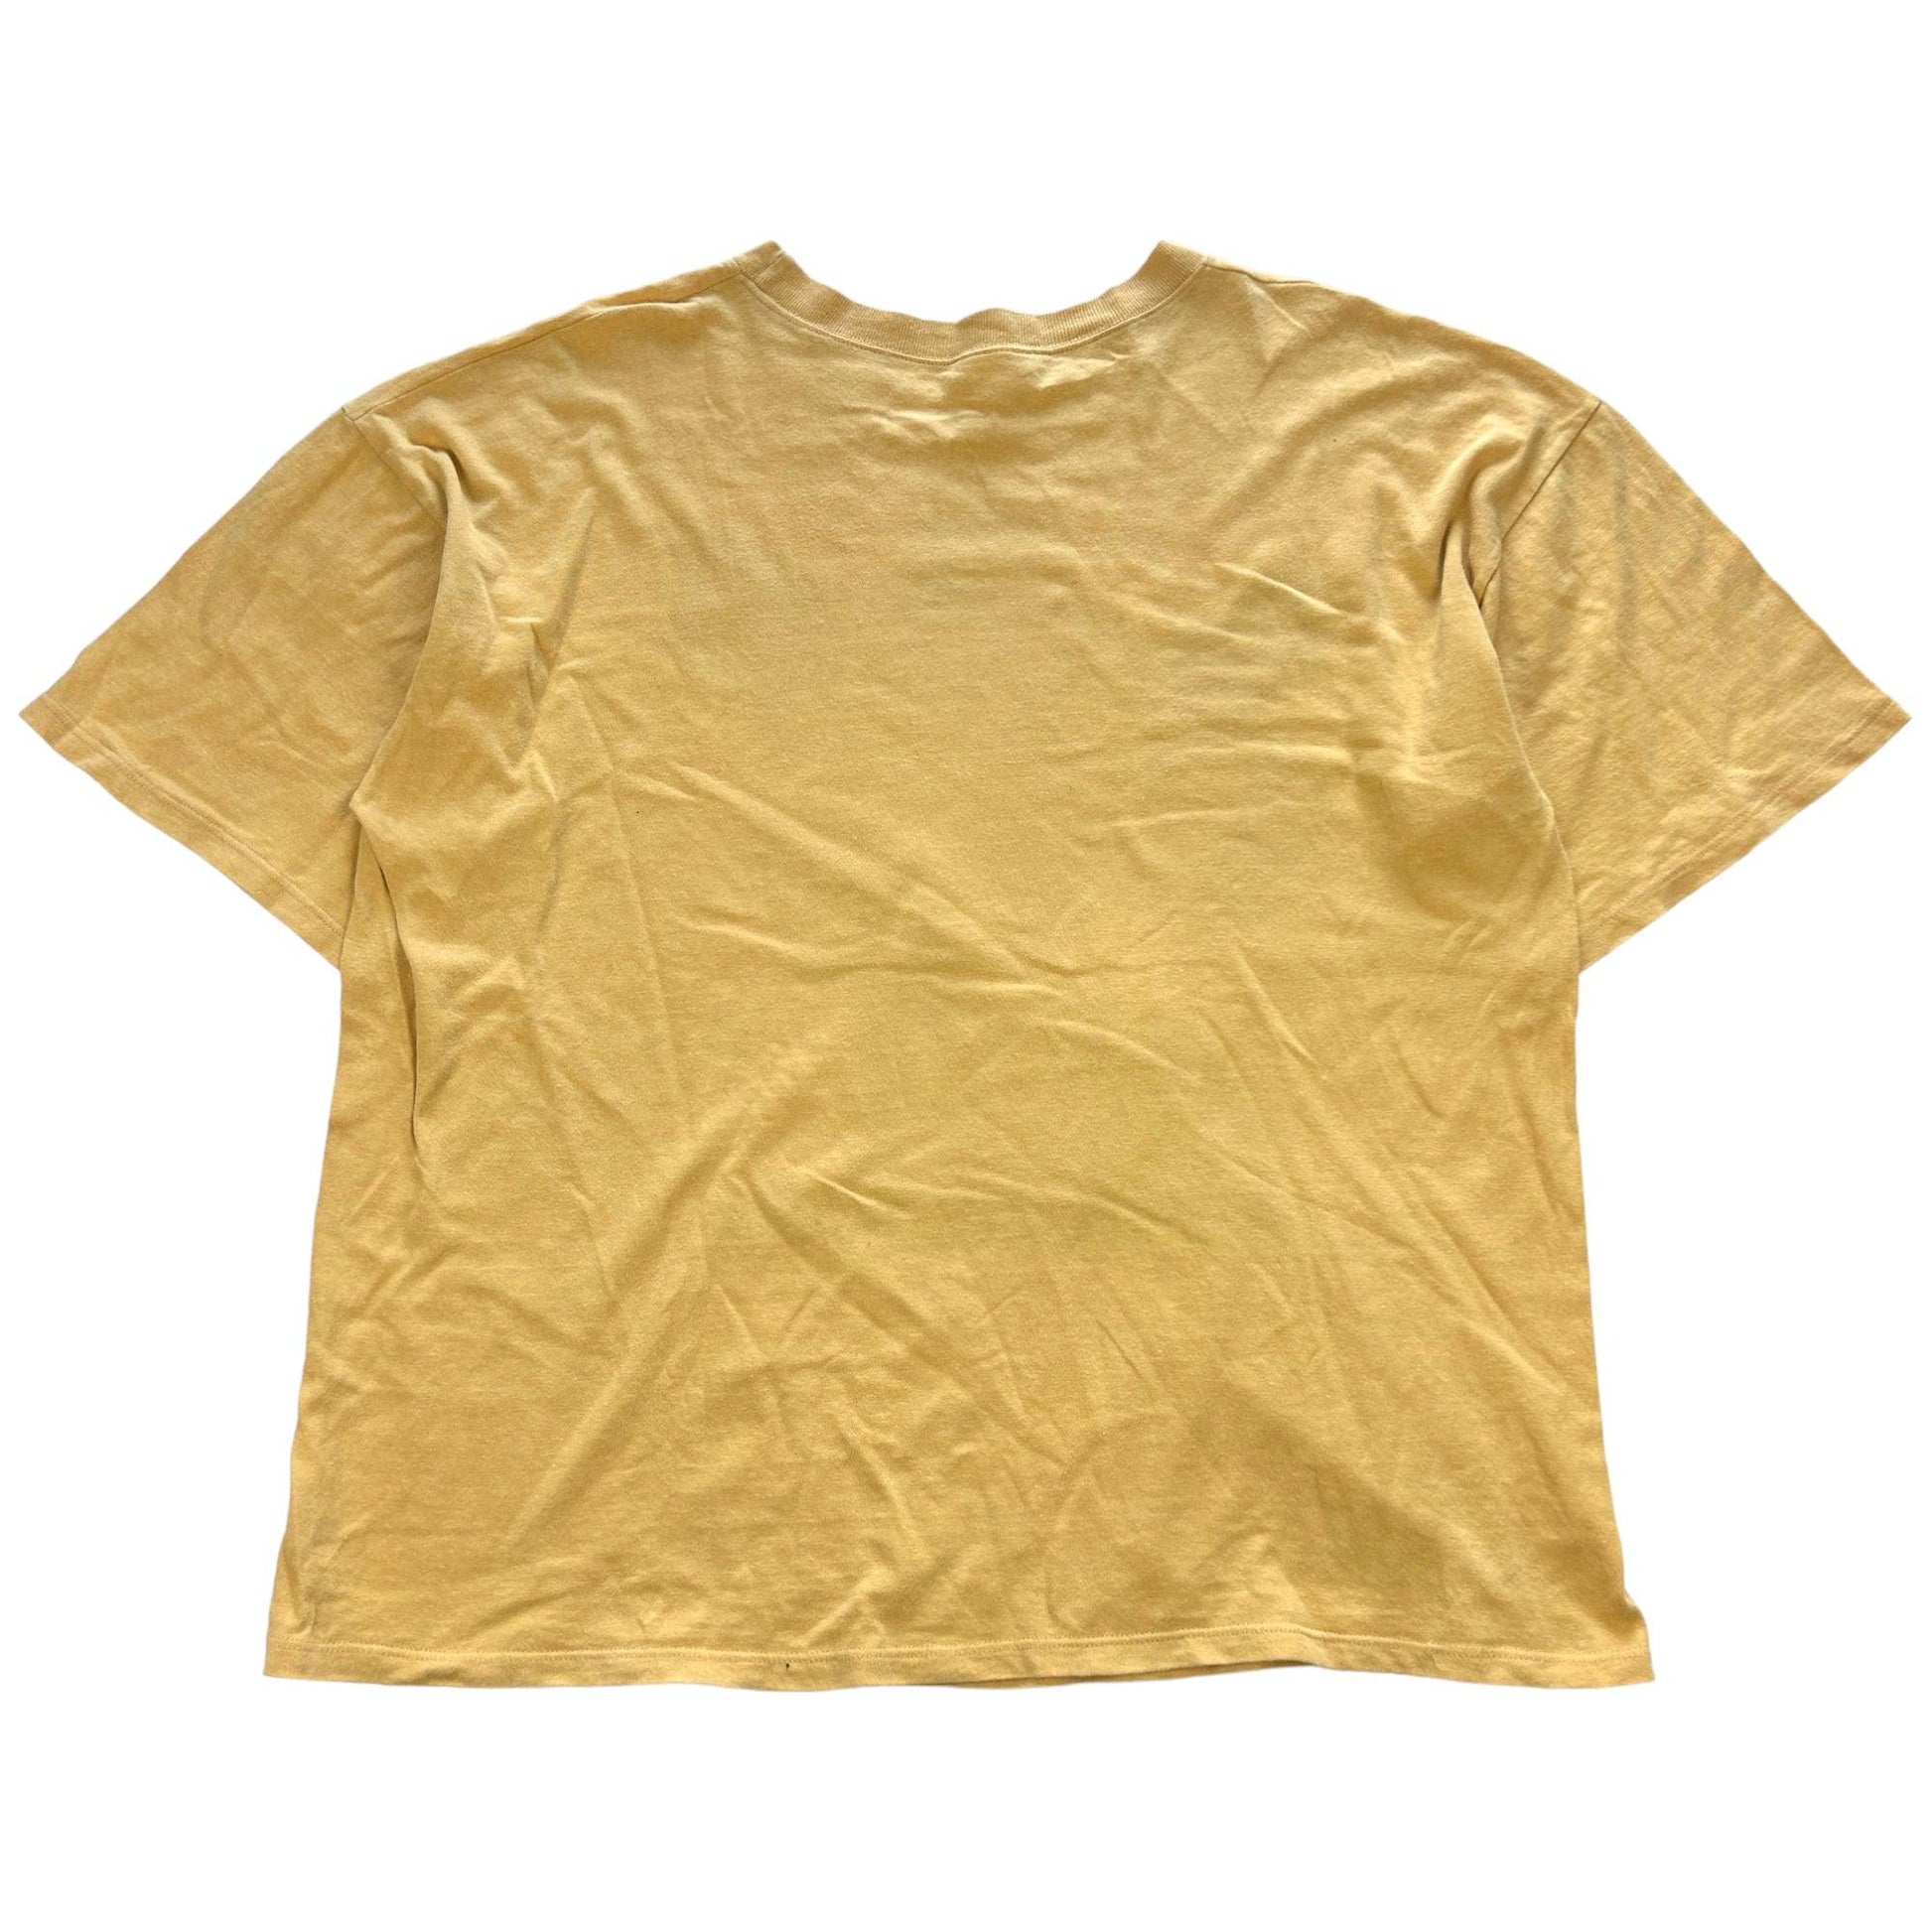 Vintage 1990s Picasso Art T Shirt Size XL - Known Source